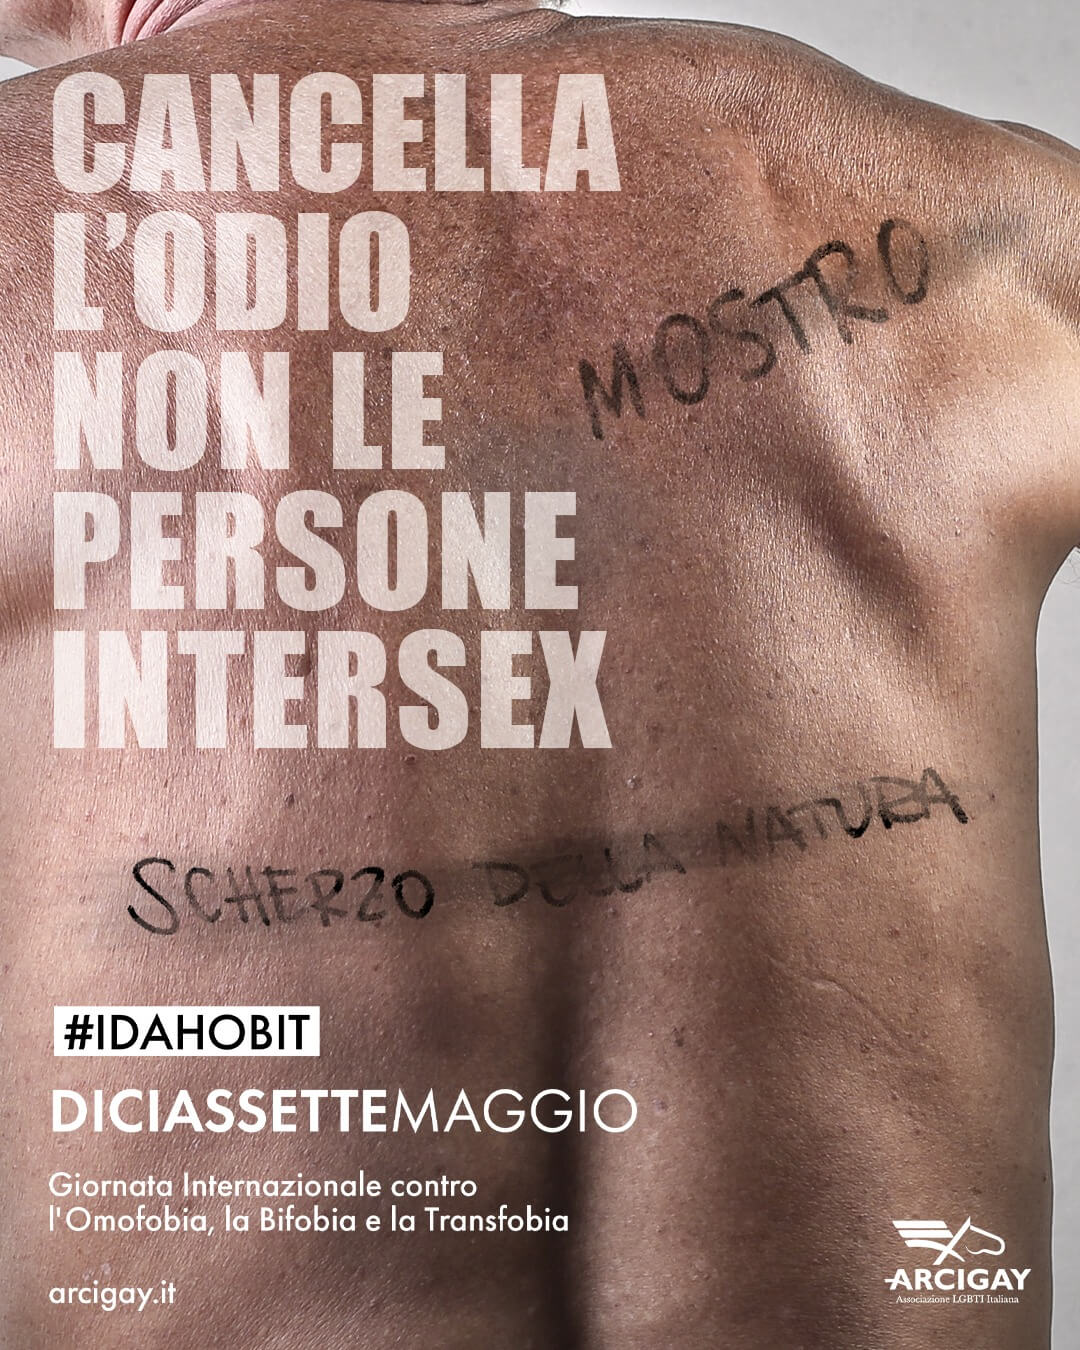 Omobitransfobia, la nuova campagna Arcigay: "Cancella l'odio, non le persone LGBTQIA+" - arcigay omofobia 112 - Gay.it